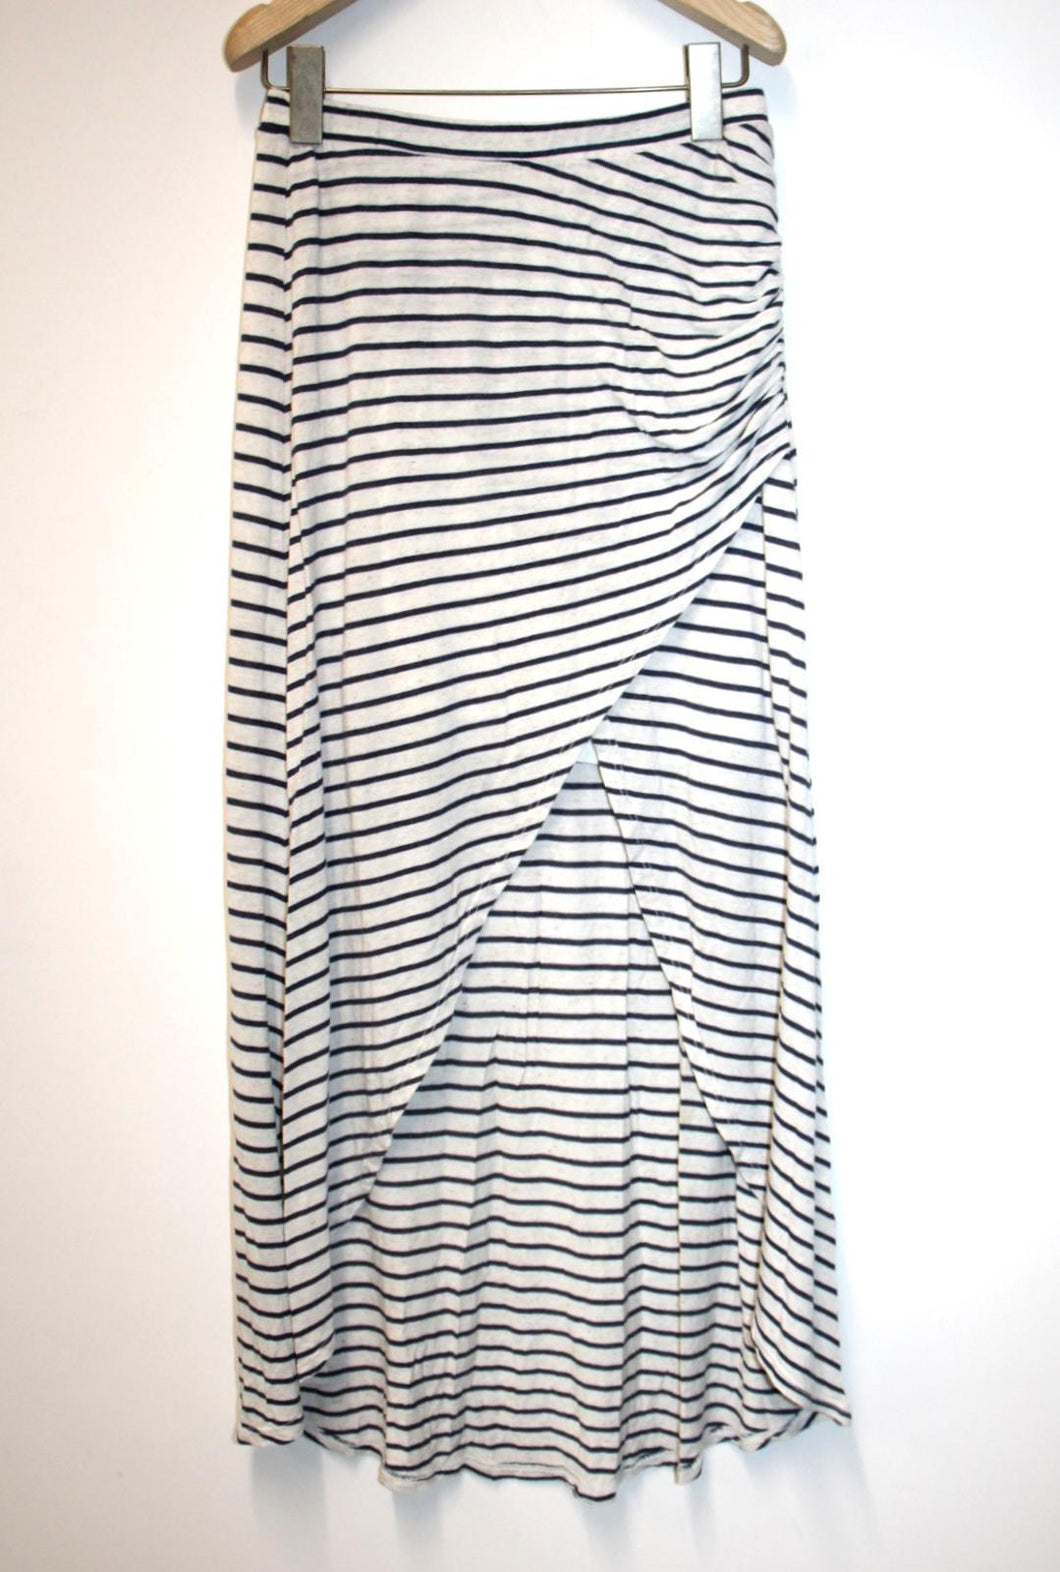 ELLA MOSS Ladies White & Navy Blue Stripe Linen Blend Midi Wrap Skirt Size S